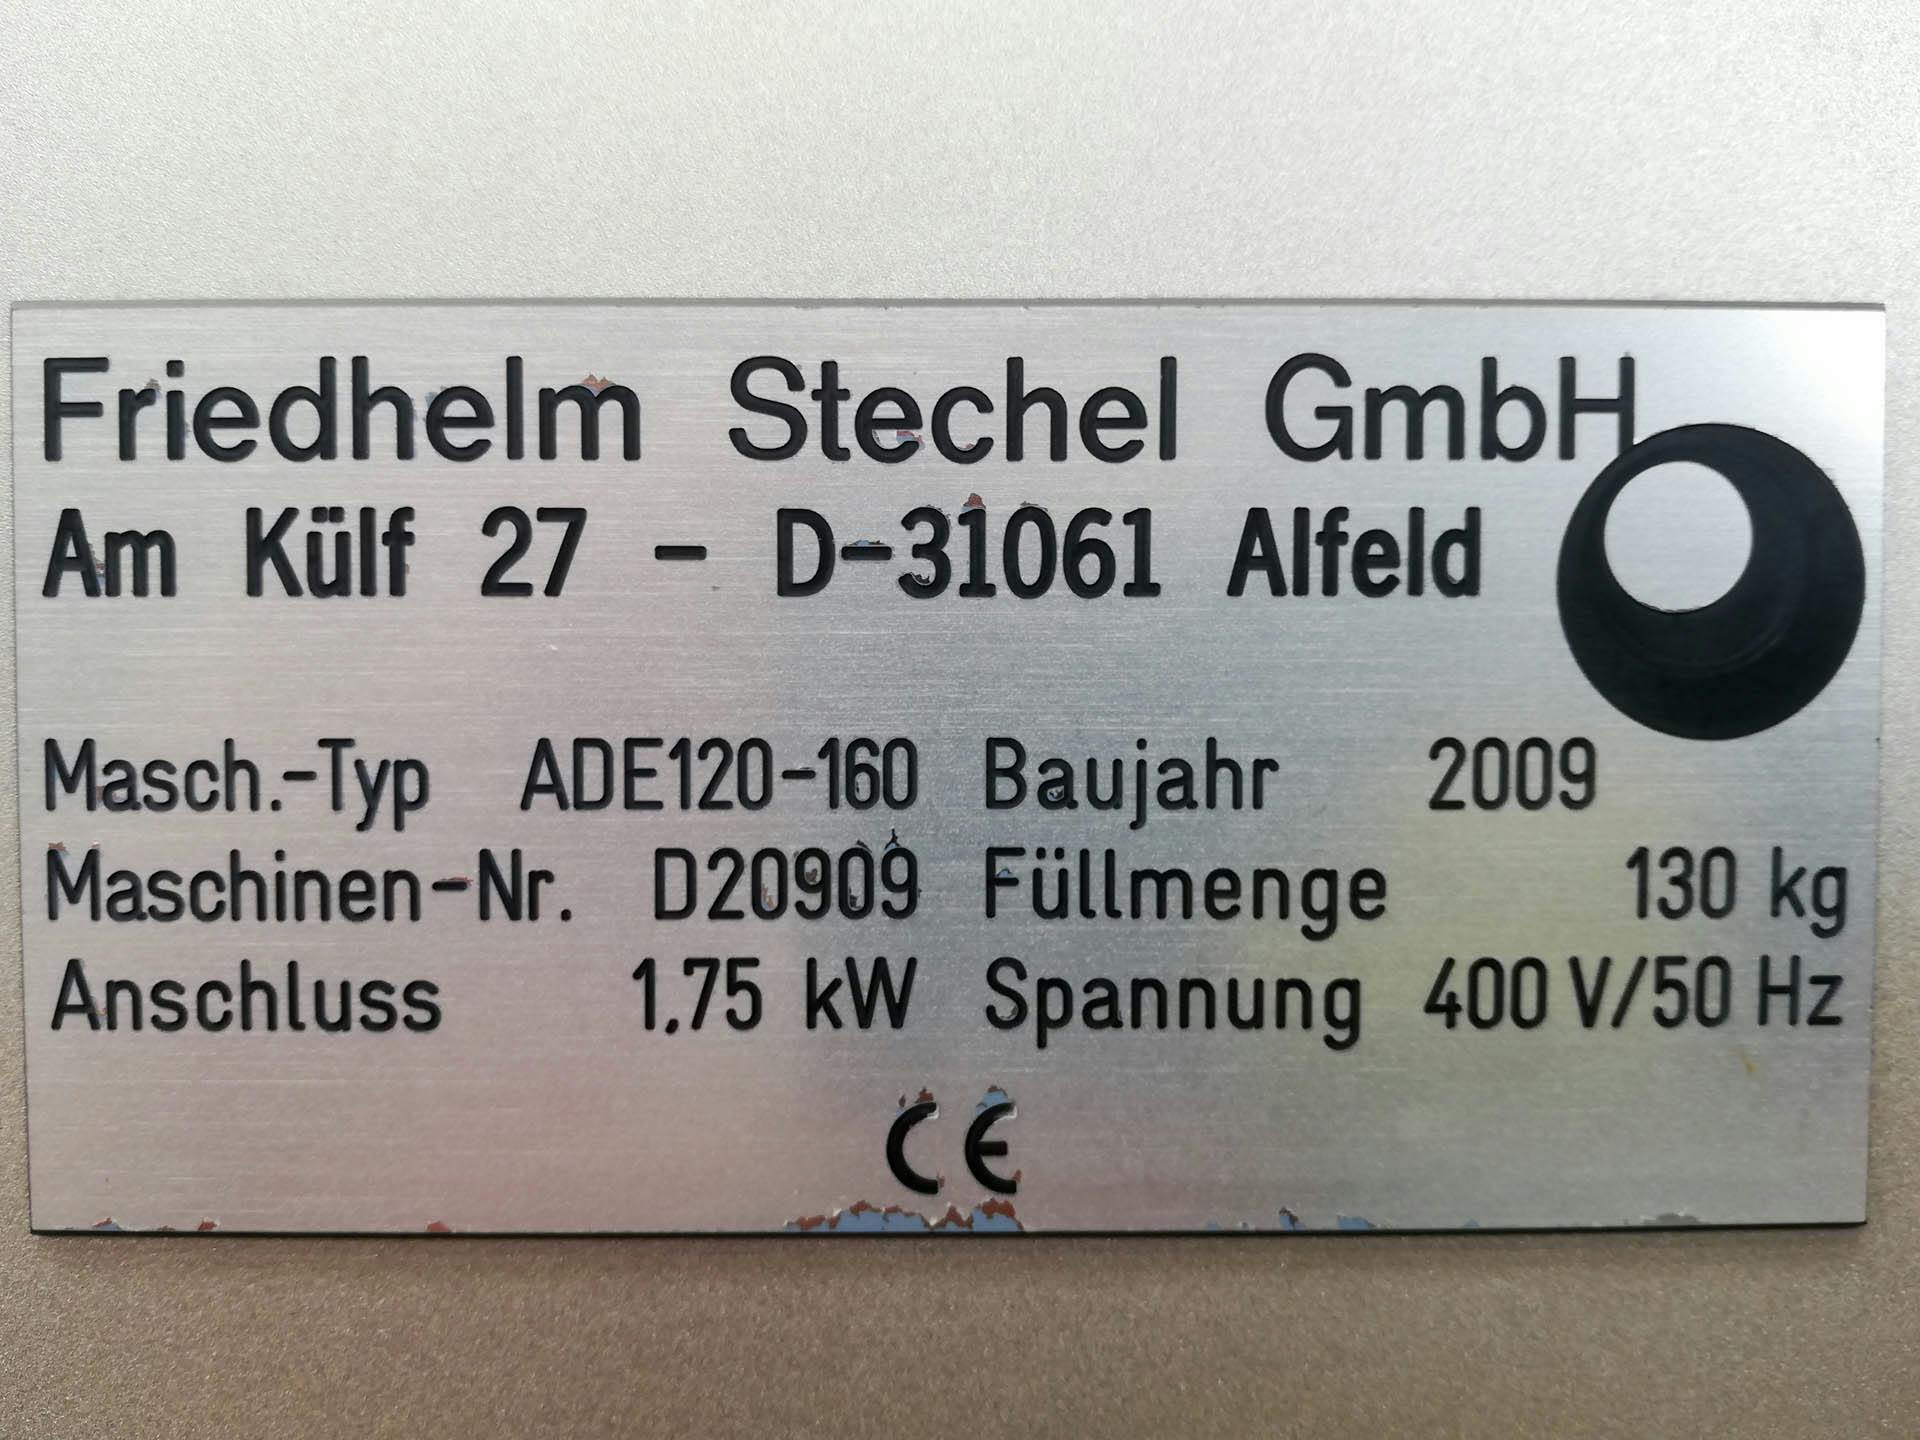 Friedhelm Stechel ADE120-150 - Dragierkessel - image 11